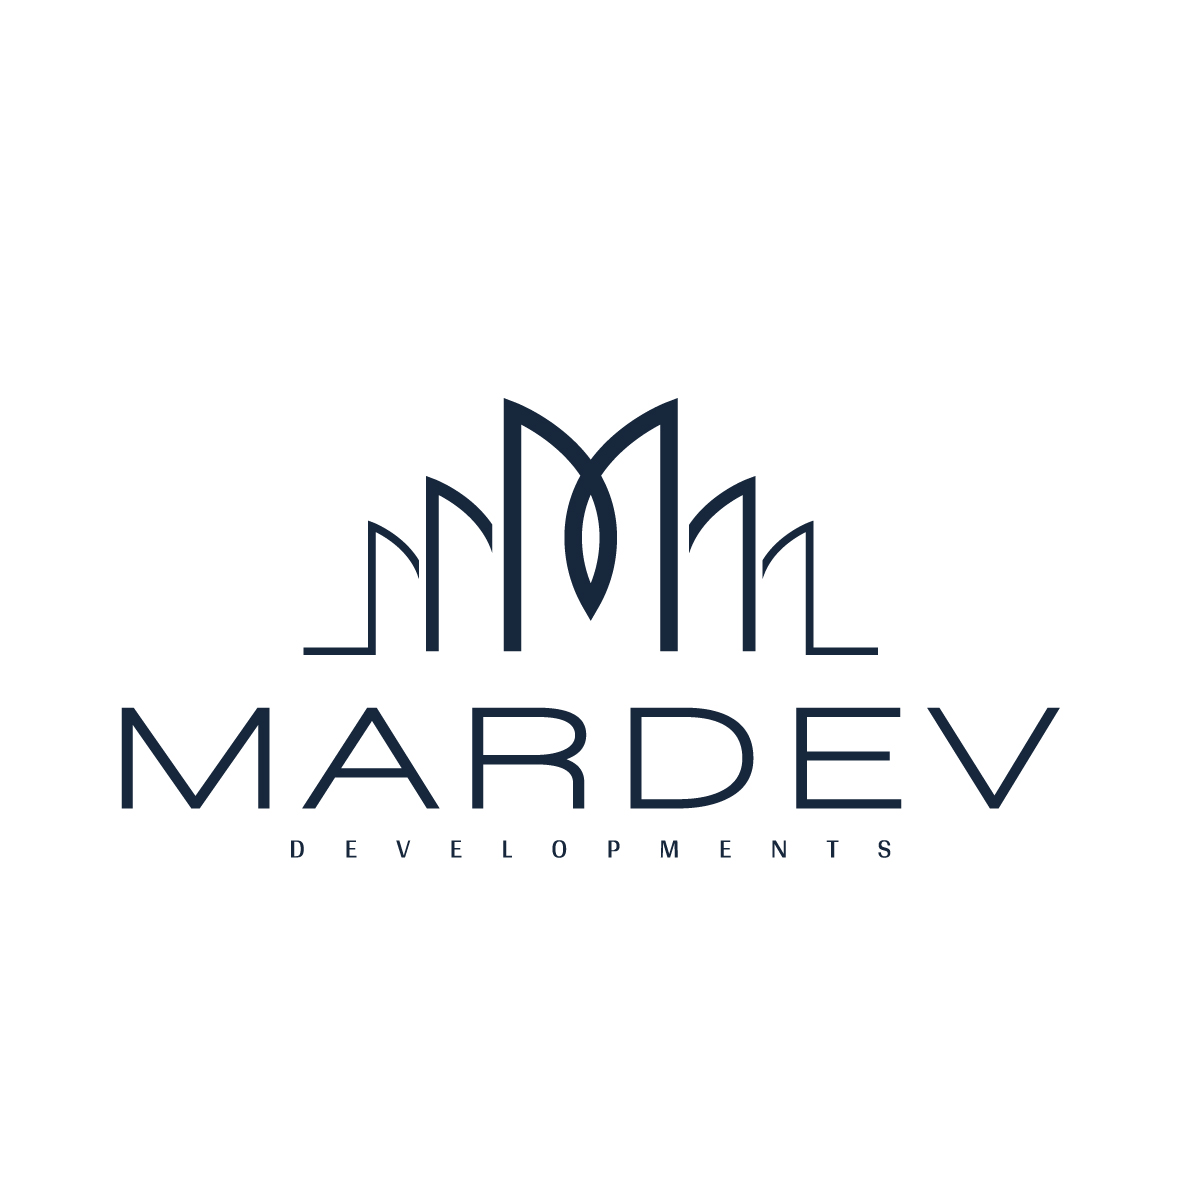 Mardev Developments